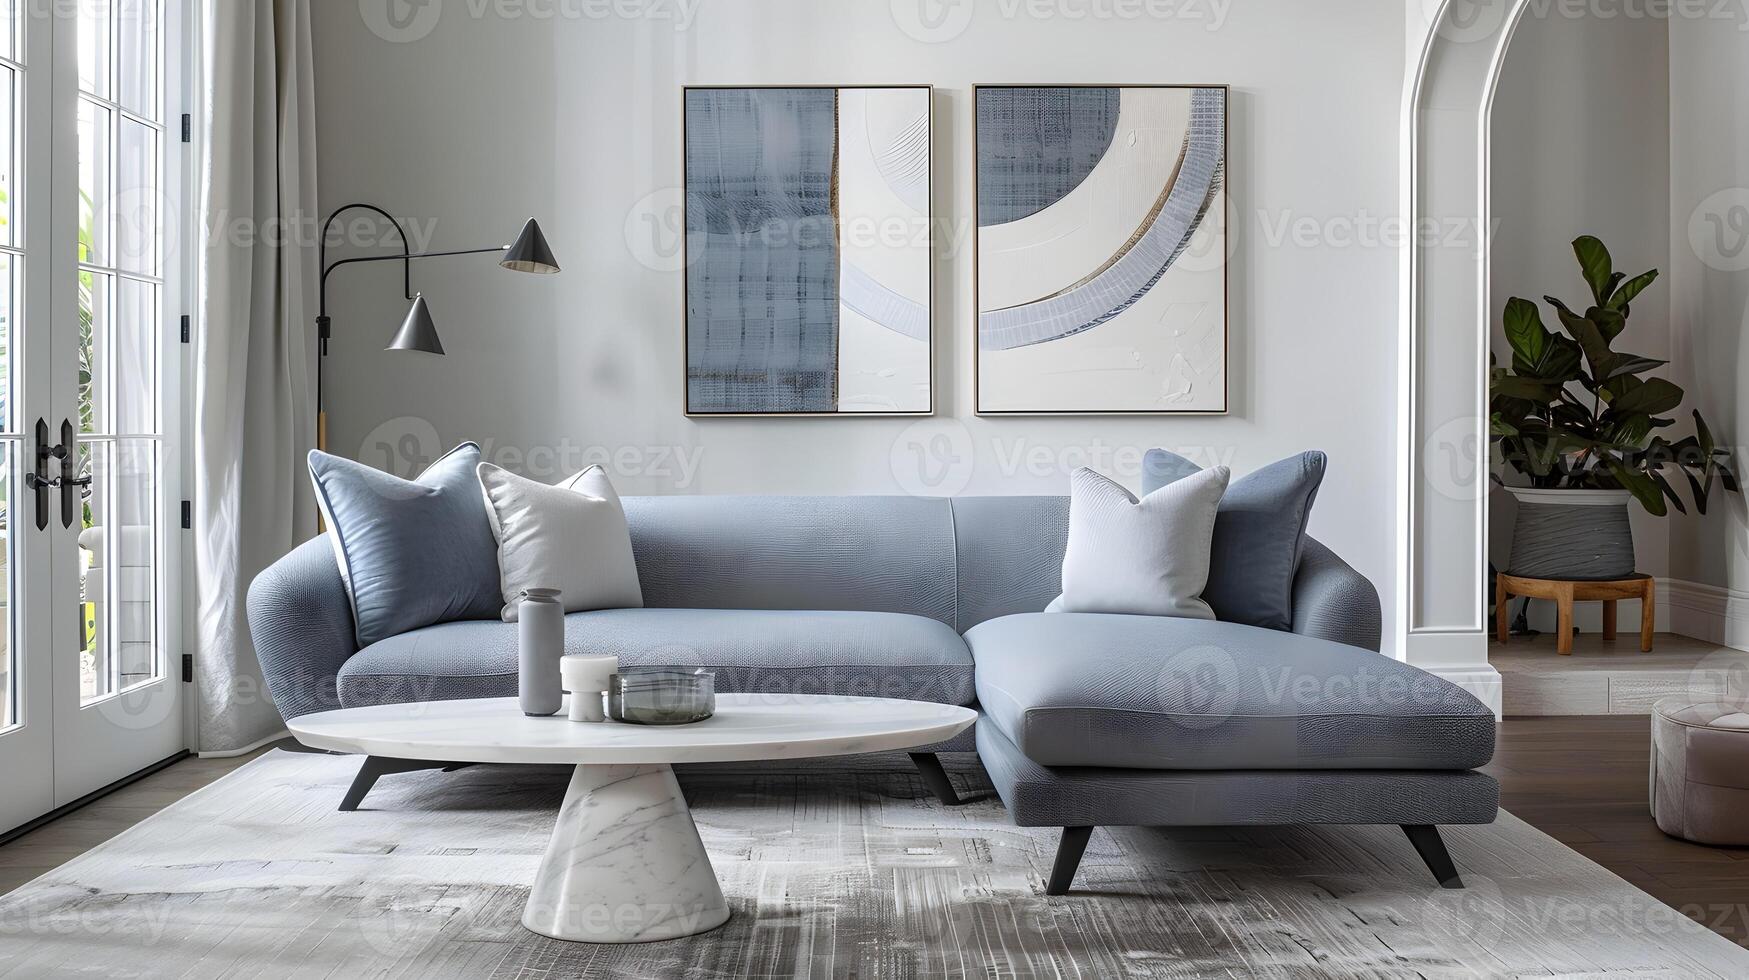 elegant leven kamer met licht blauw sofa en grijs hoek bankstel in modern hedendaags instelling foto